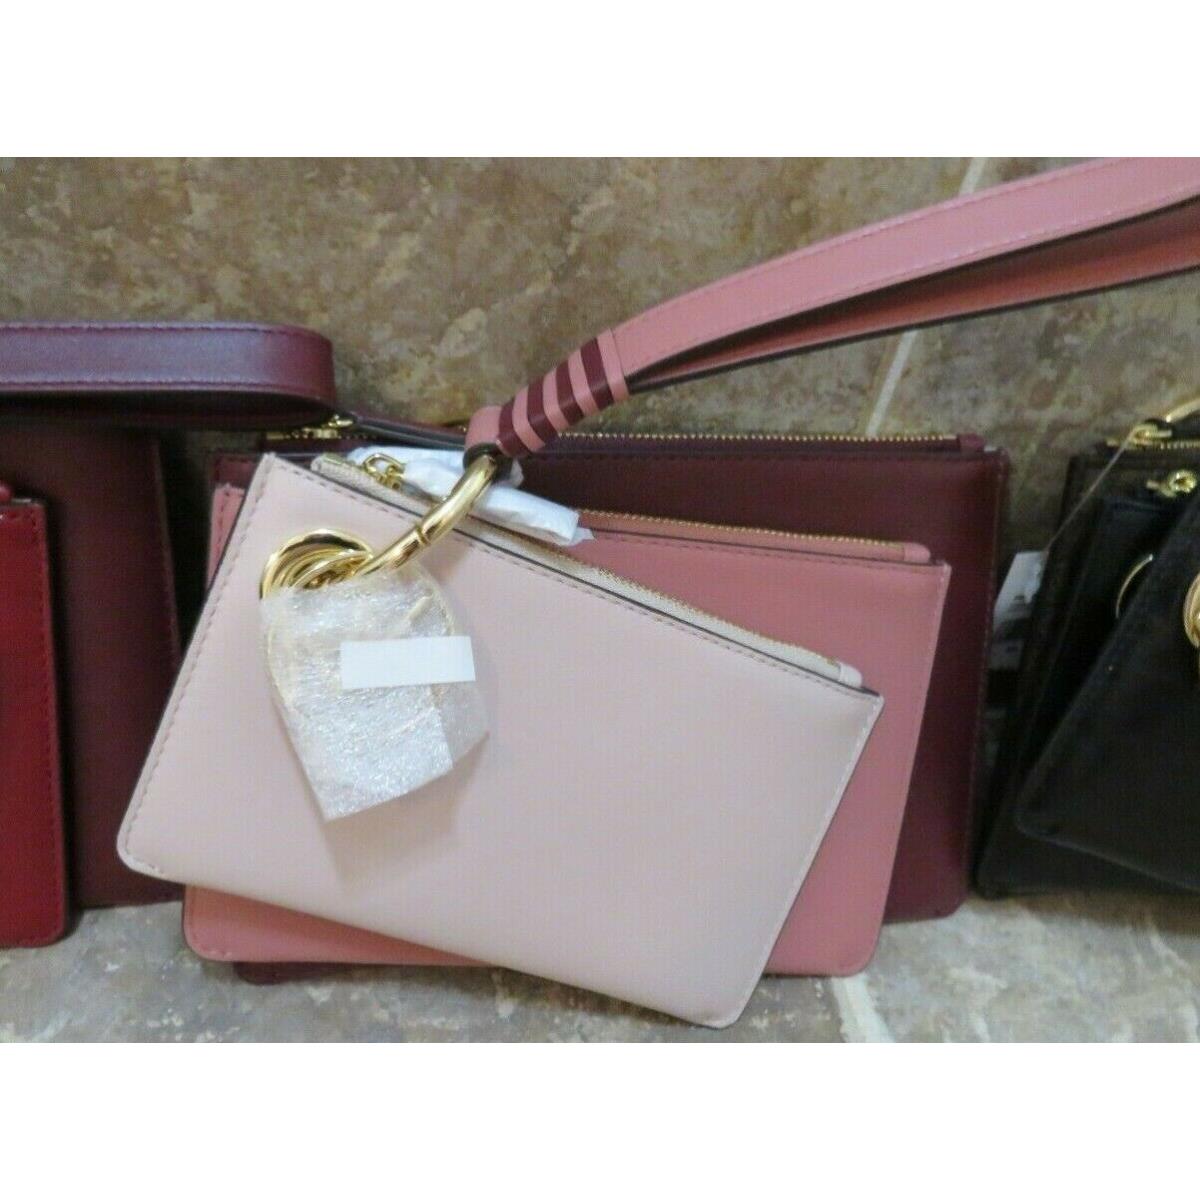 Michael Kors Wristlet/clutch Set: 3 Sizes + Charm + Ring + Strap Interchangeable Pink light, medium, oxblood w/ gold